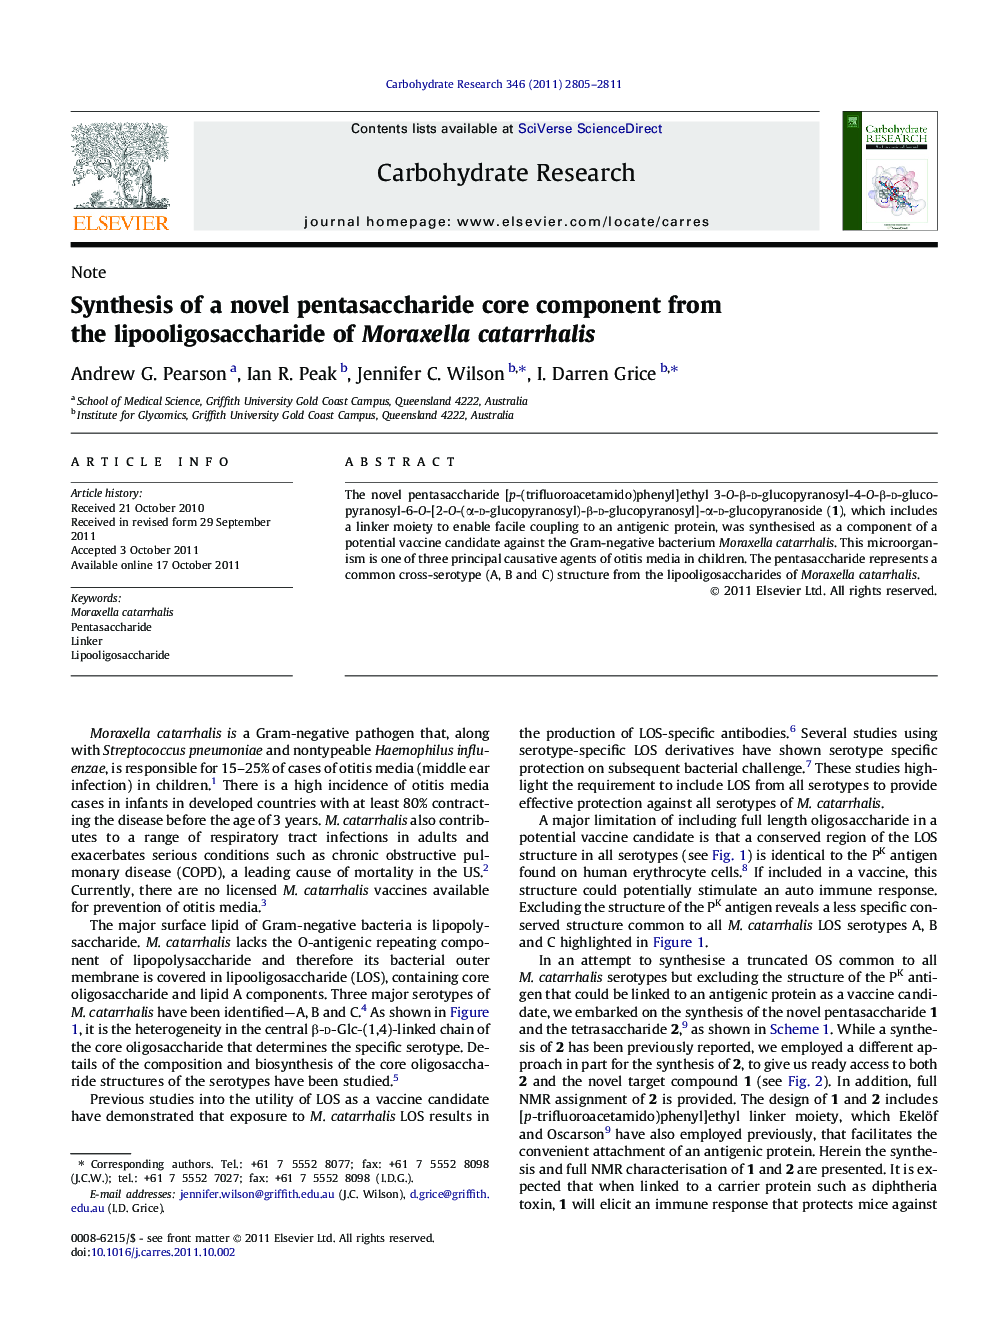 Synthesis of a novel pentasaccharide core component from the lipooligosaccharide of Moraxella catarrhalis